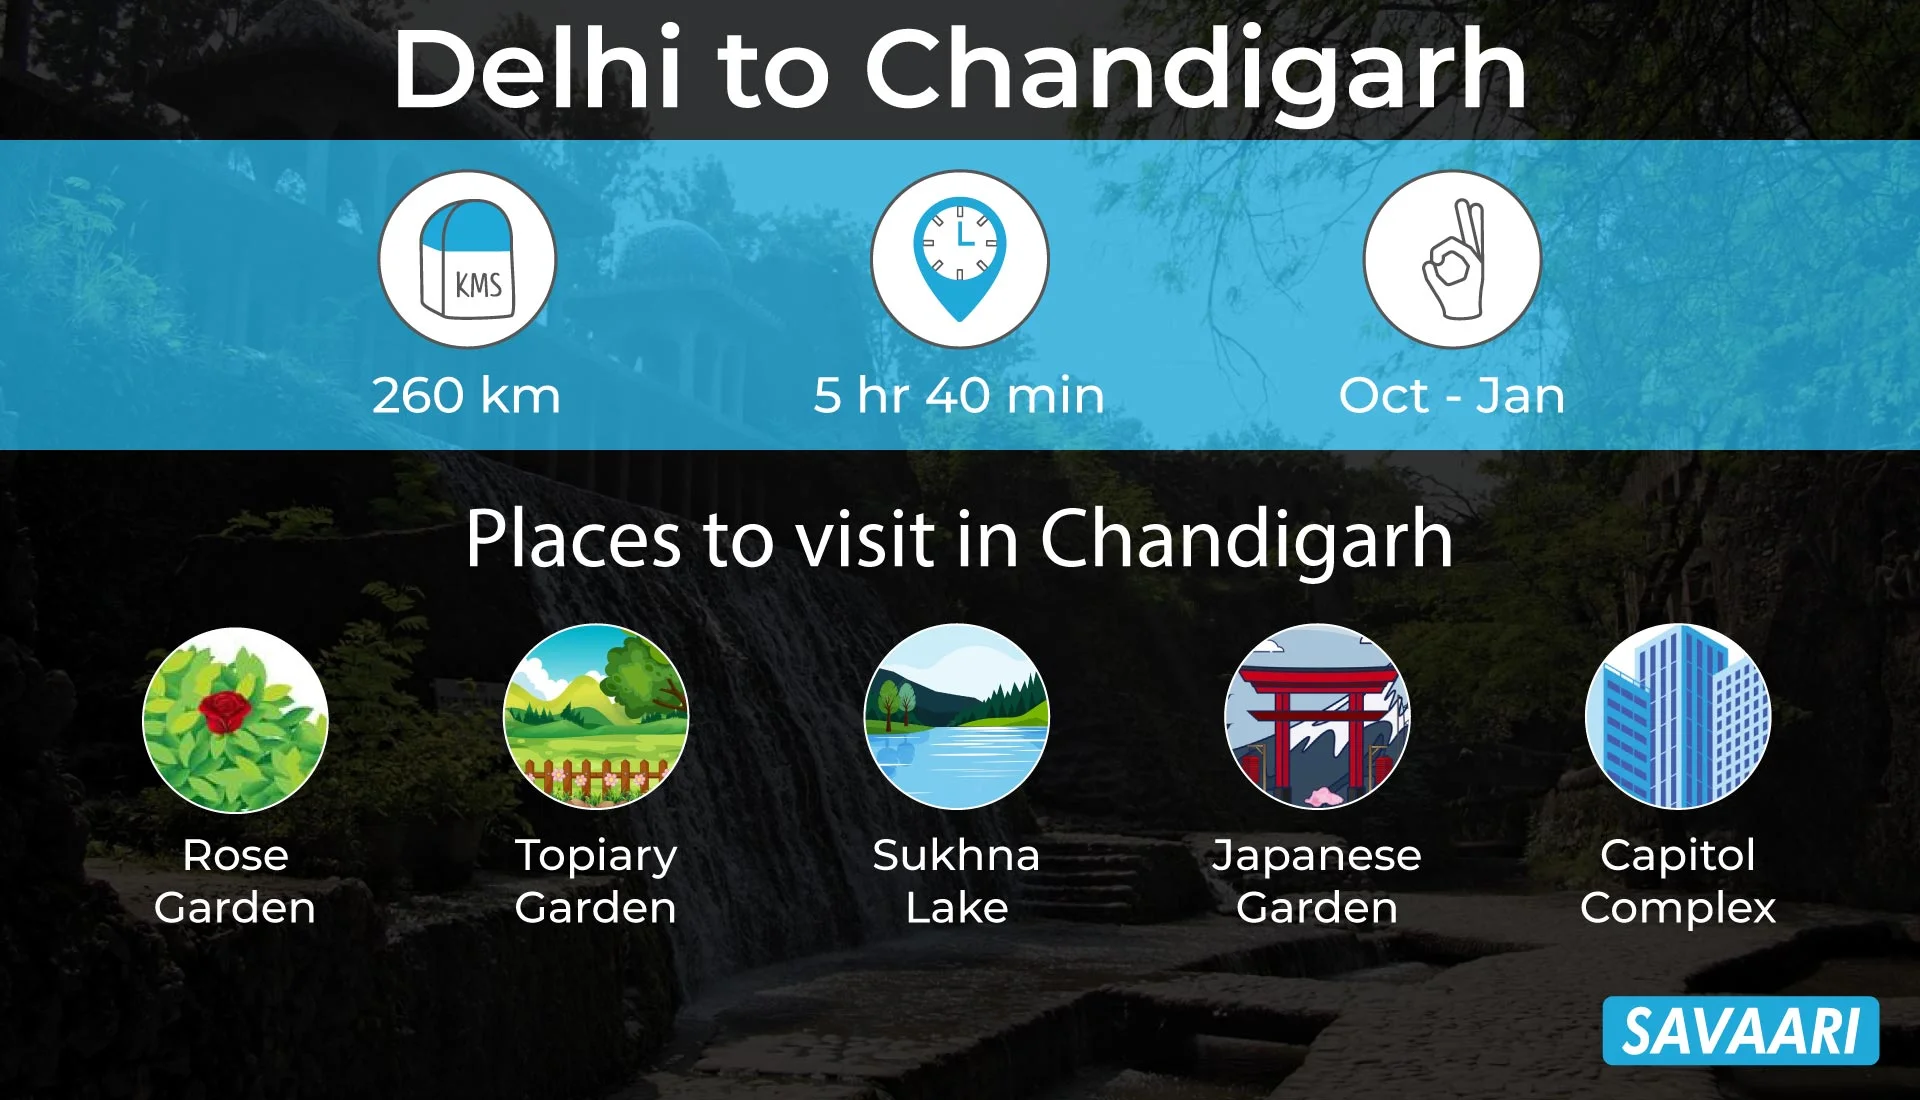 Delhi to Chandigarh roadtrip 